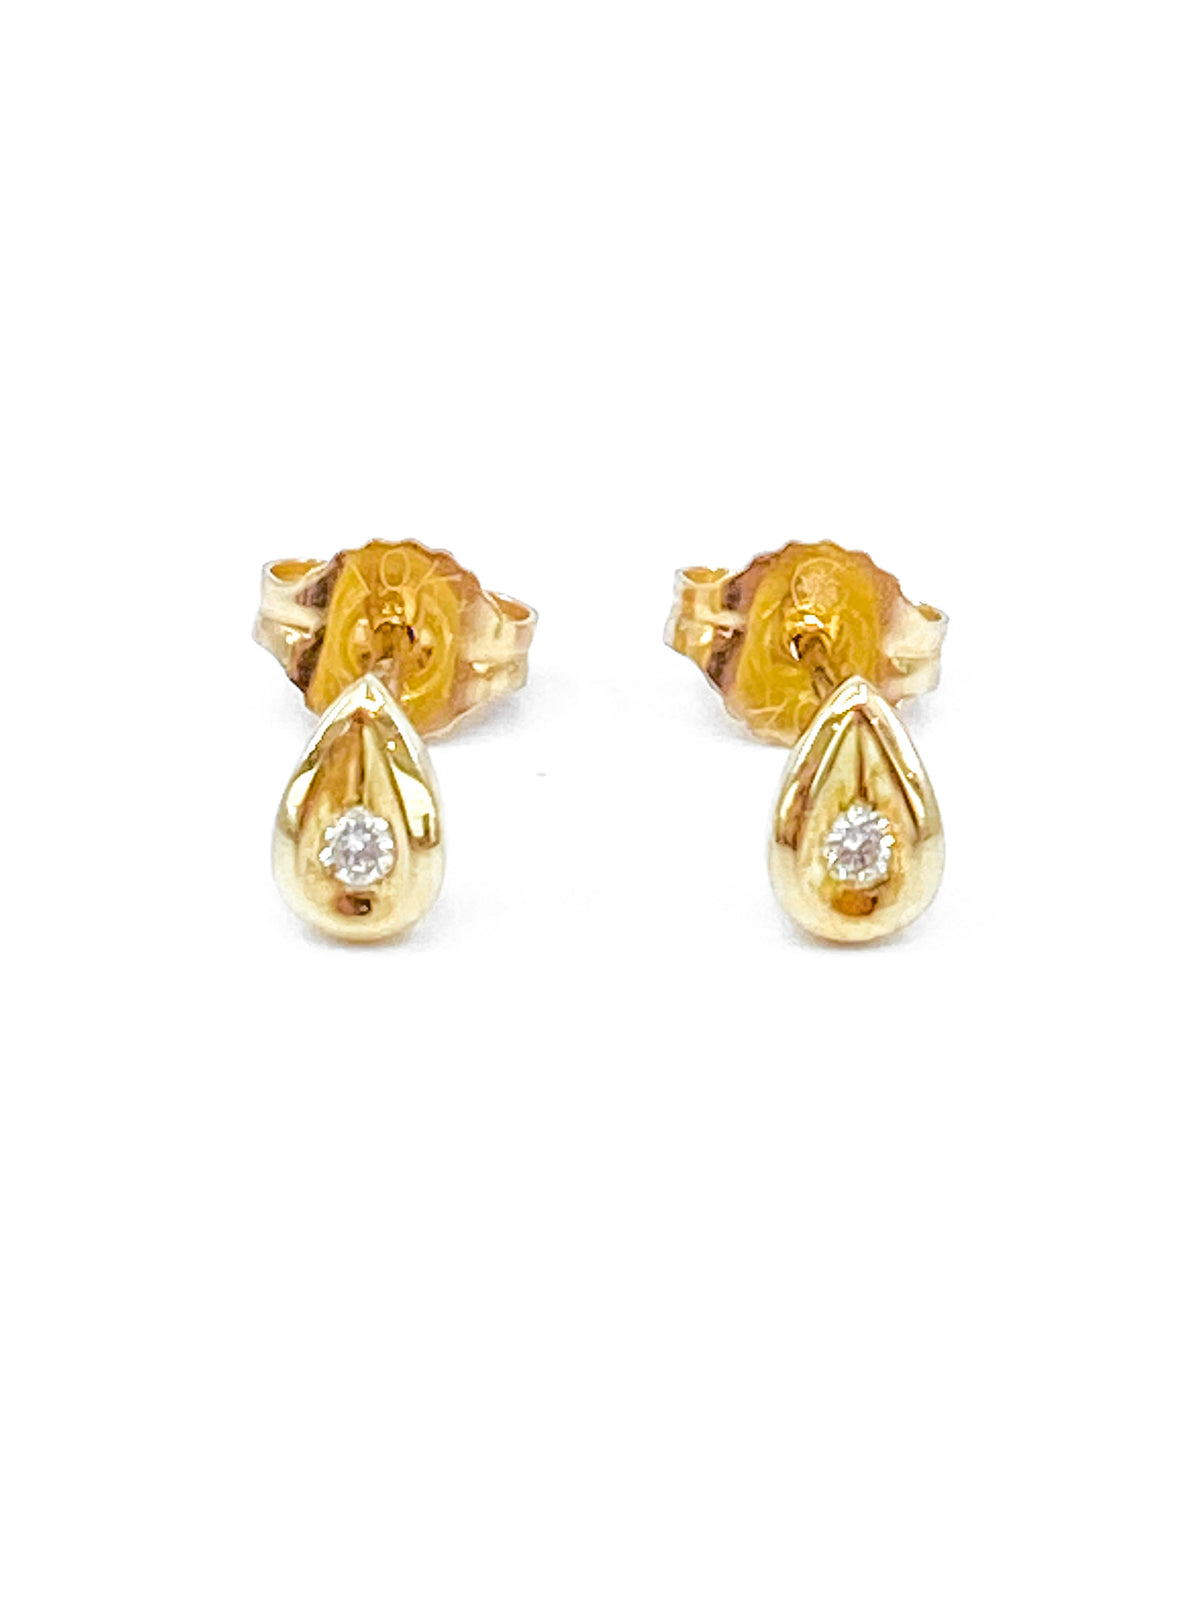 10K Yellow Gold 0.04cttw Round Cut Diamond Stud Leaf Design Earring